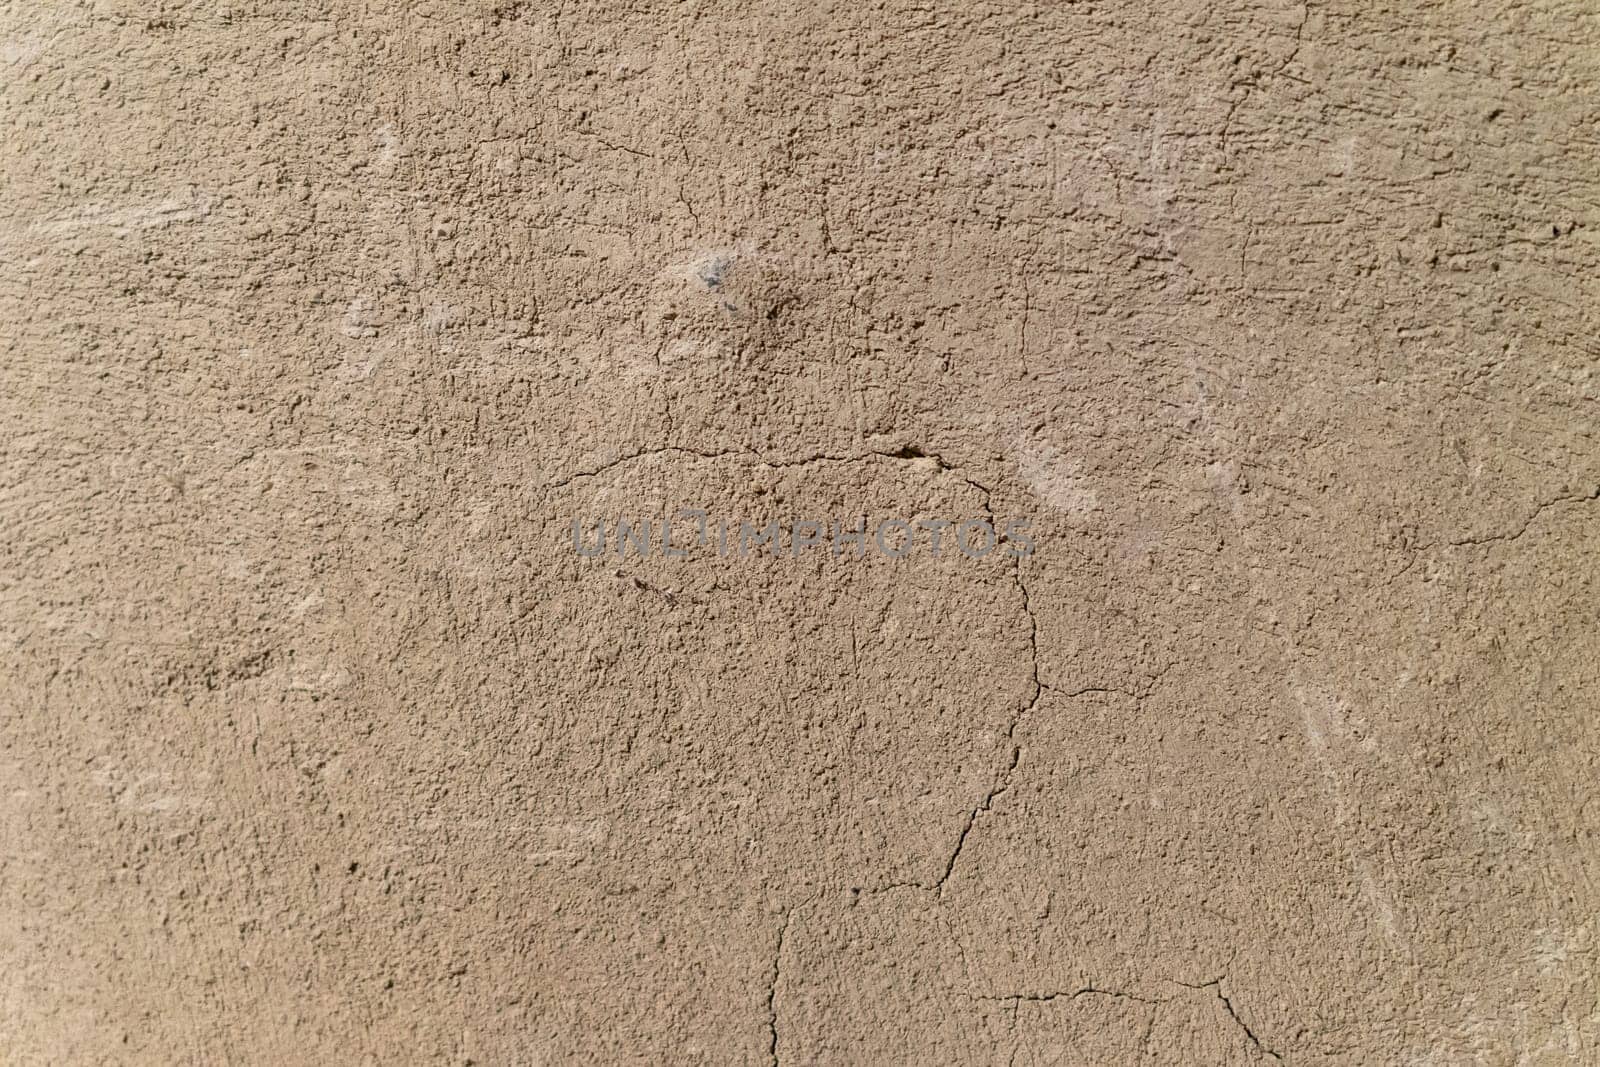 Cracked concrete wall background. Texture of old concrete by Serhii_Voroshchuk